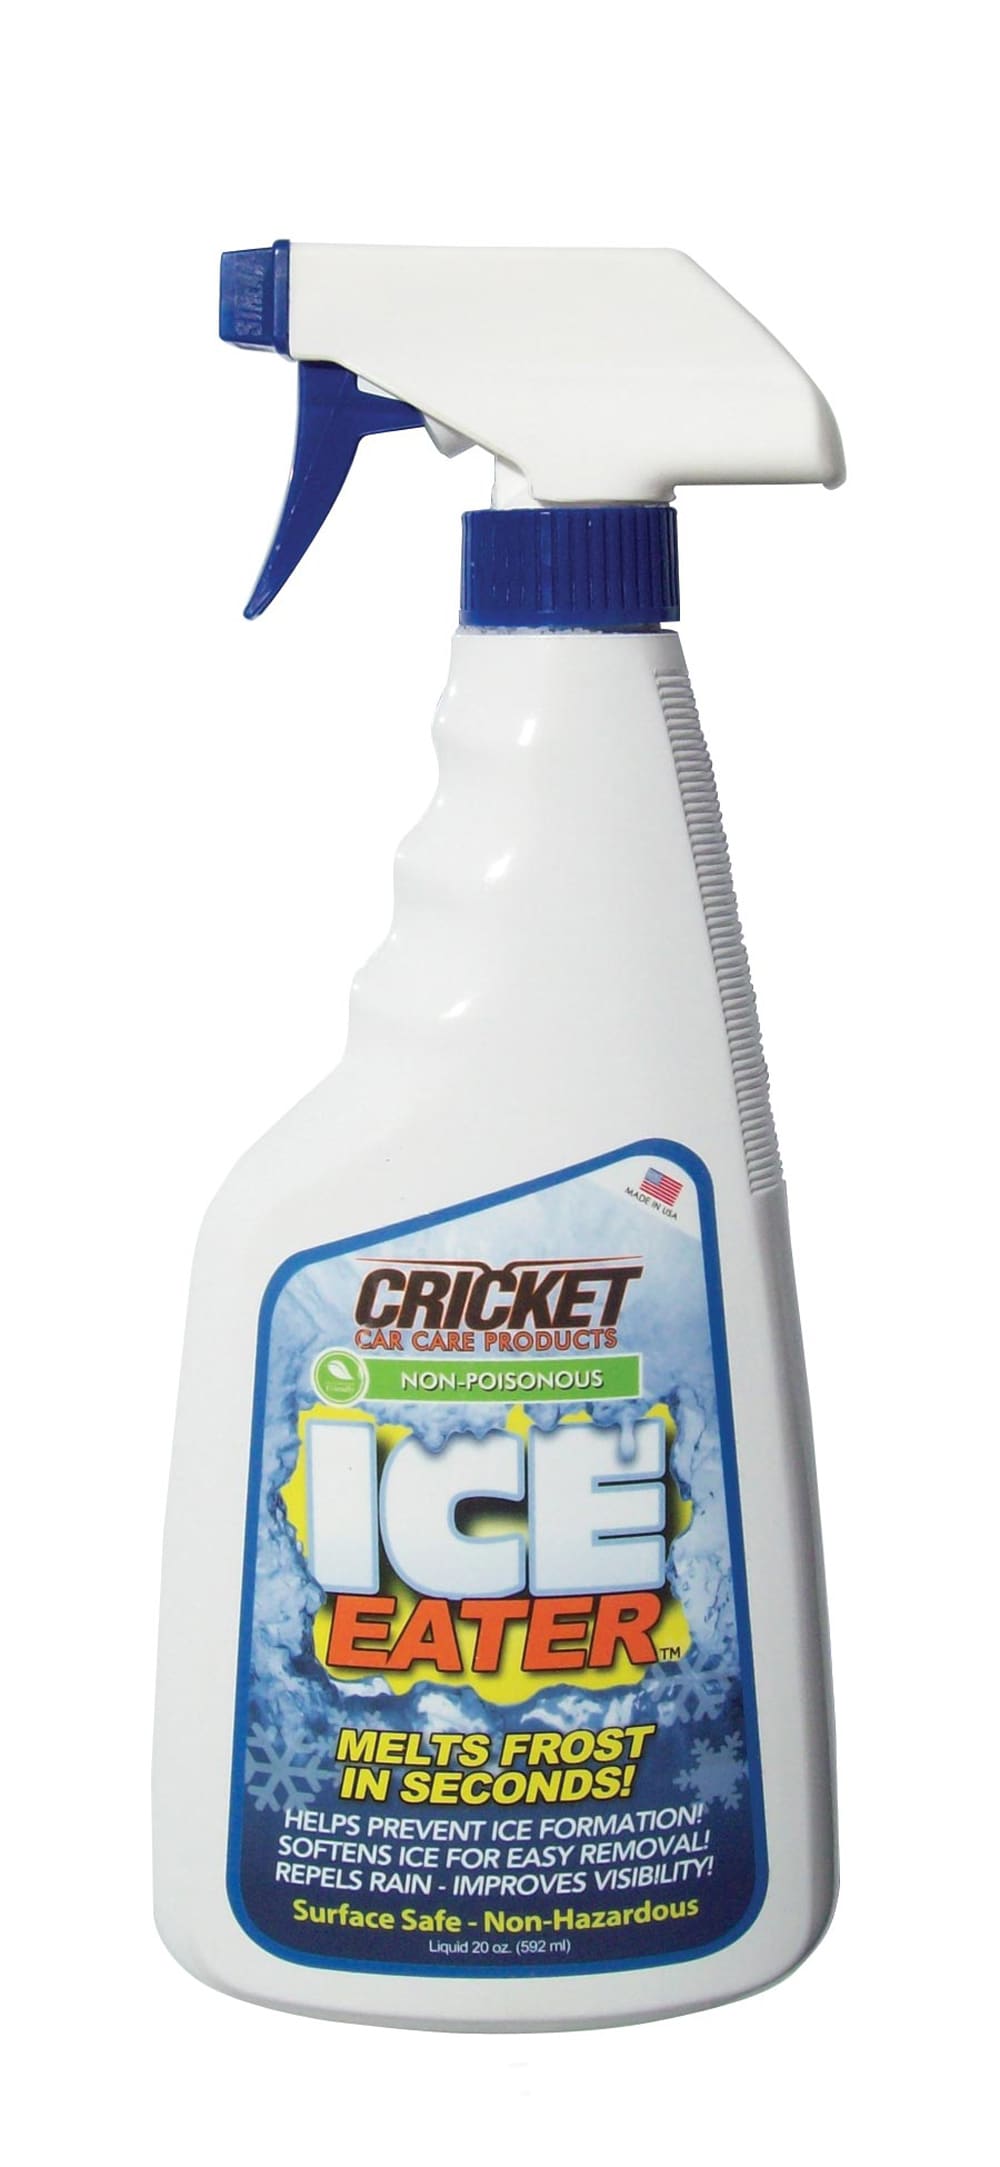 Cricket Car Care Products 20-oz Trigger Spray De-Icer at